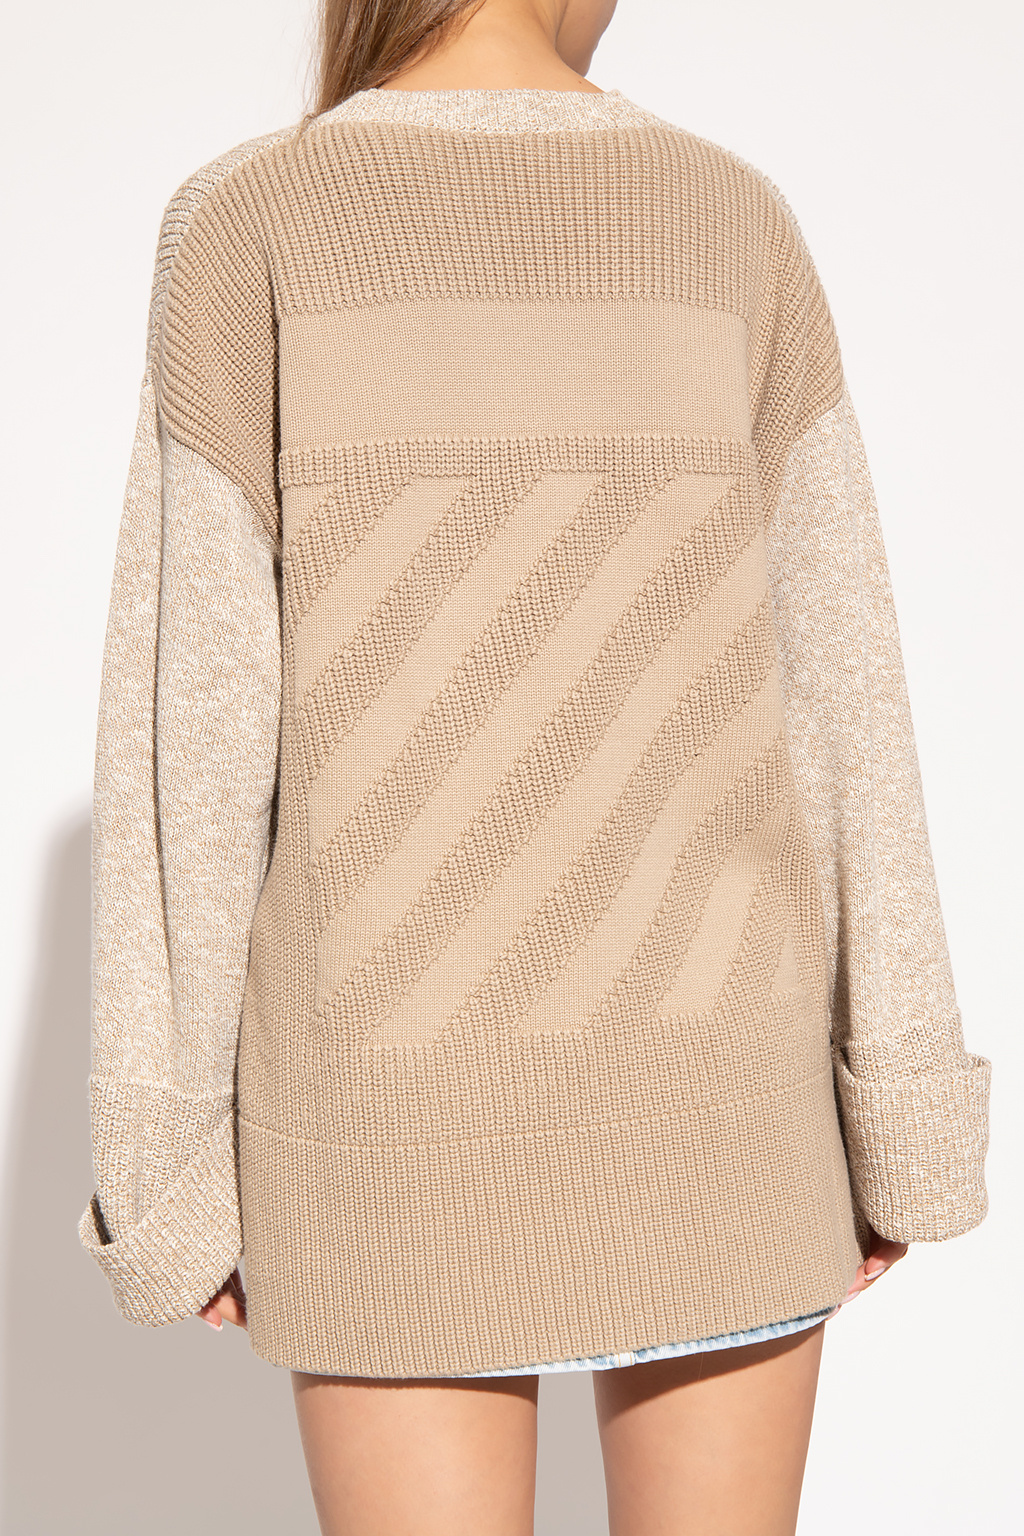 Off-White Asymmetric sweater